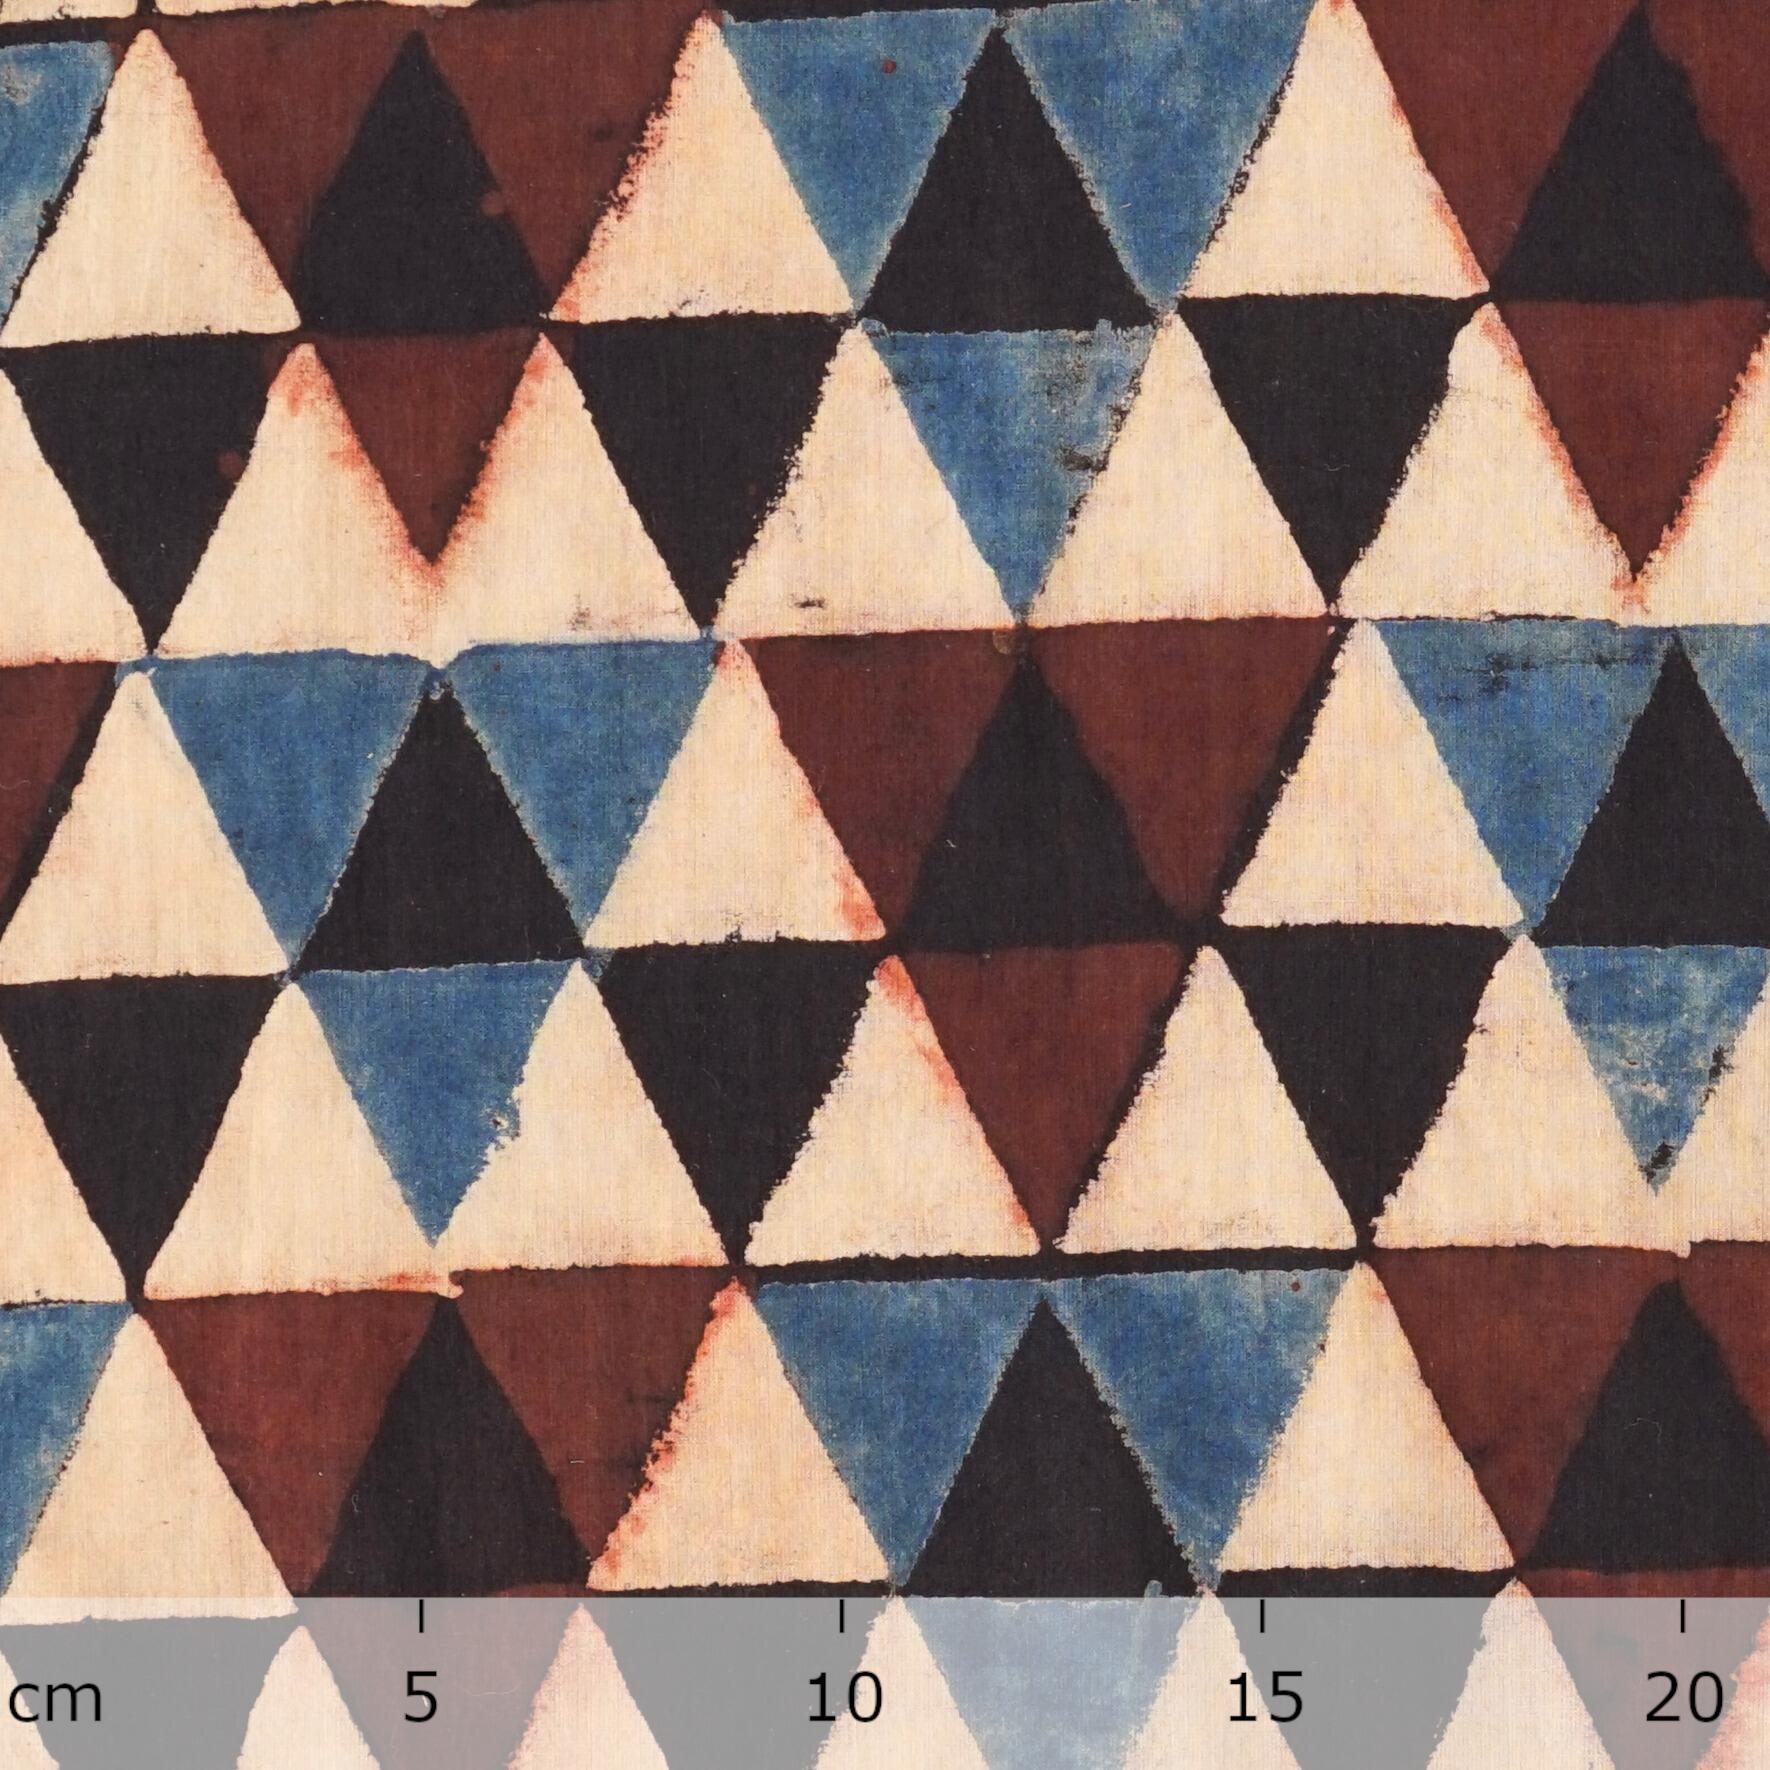 4 - SIK53 - Hand Block-Printed Cotton - Aula Triangles Design - Indigo Blue, Black, Alizarin Red Dyes - Ruler